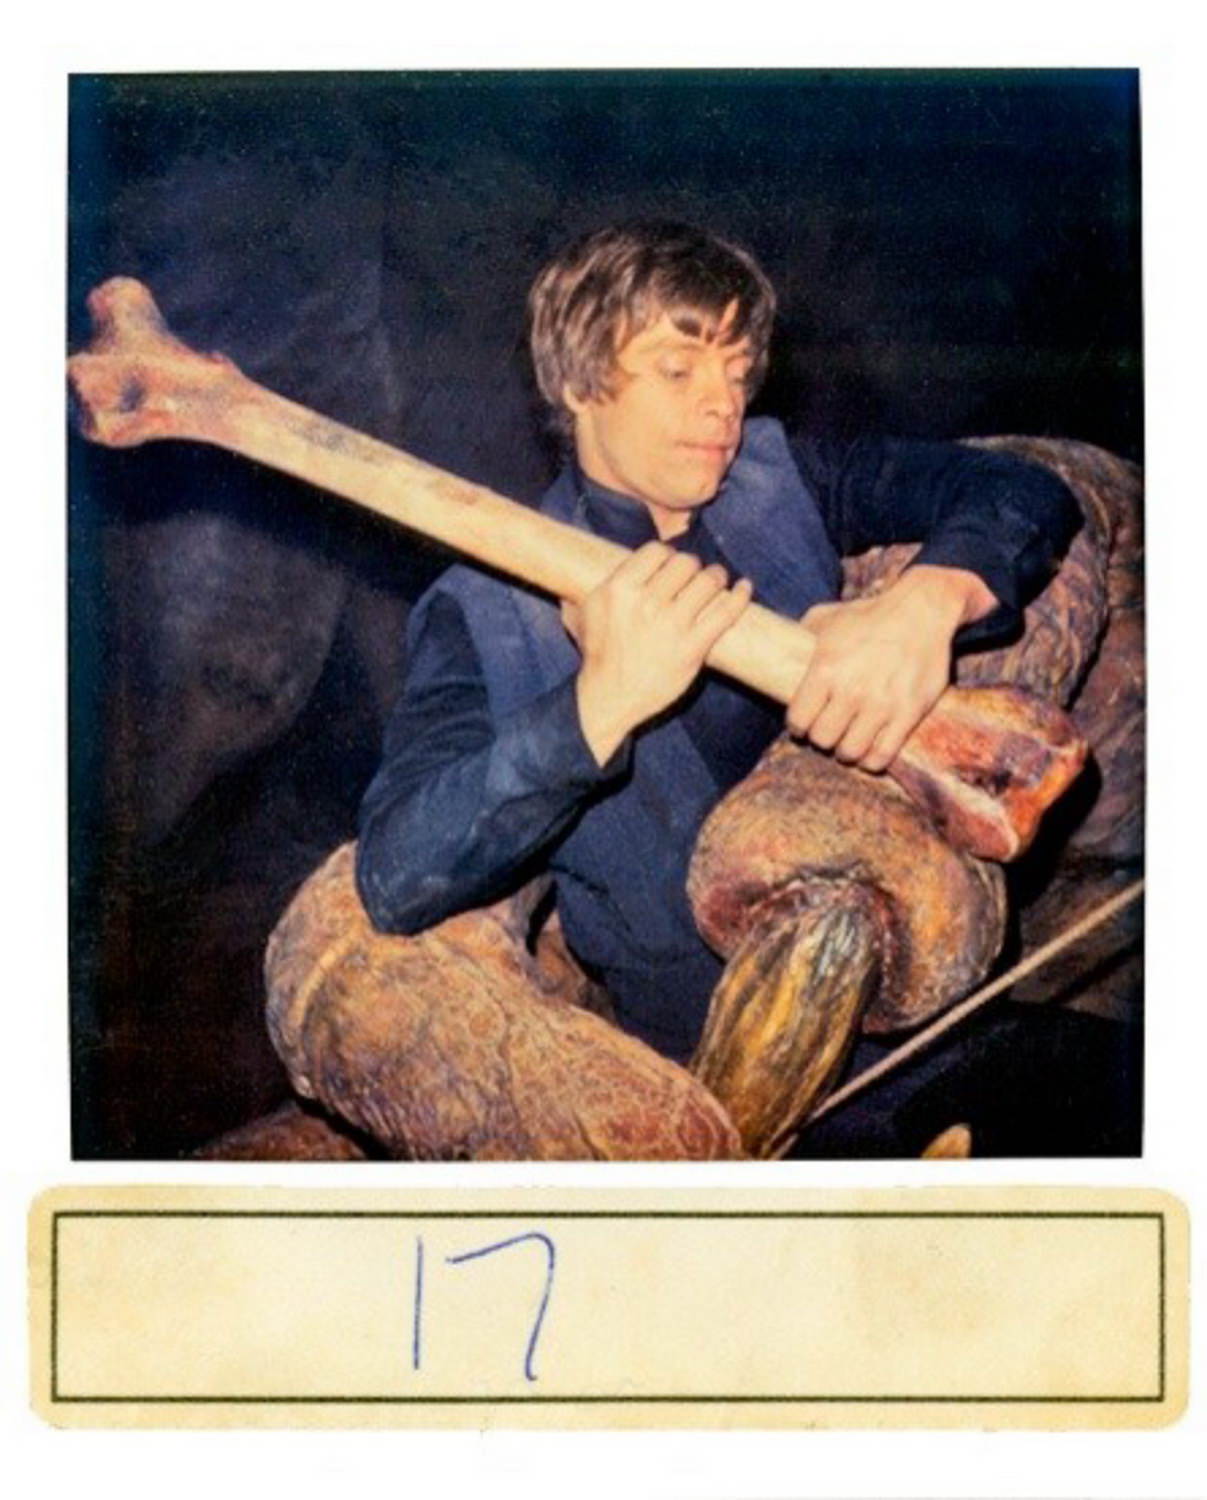 Luke Skywalker in the grip of the rancor.